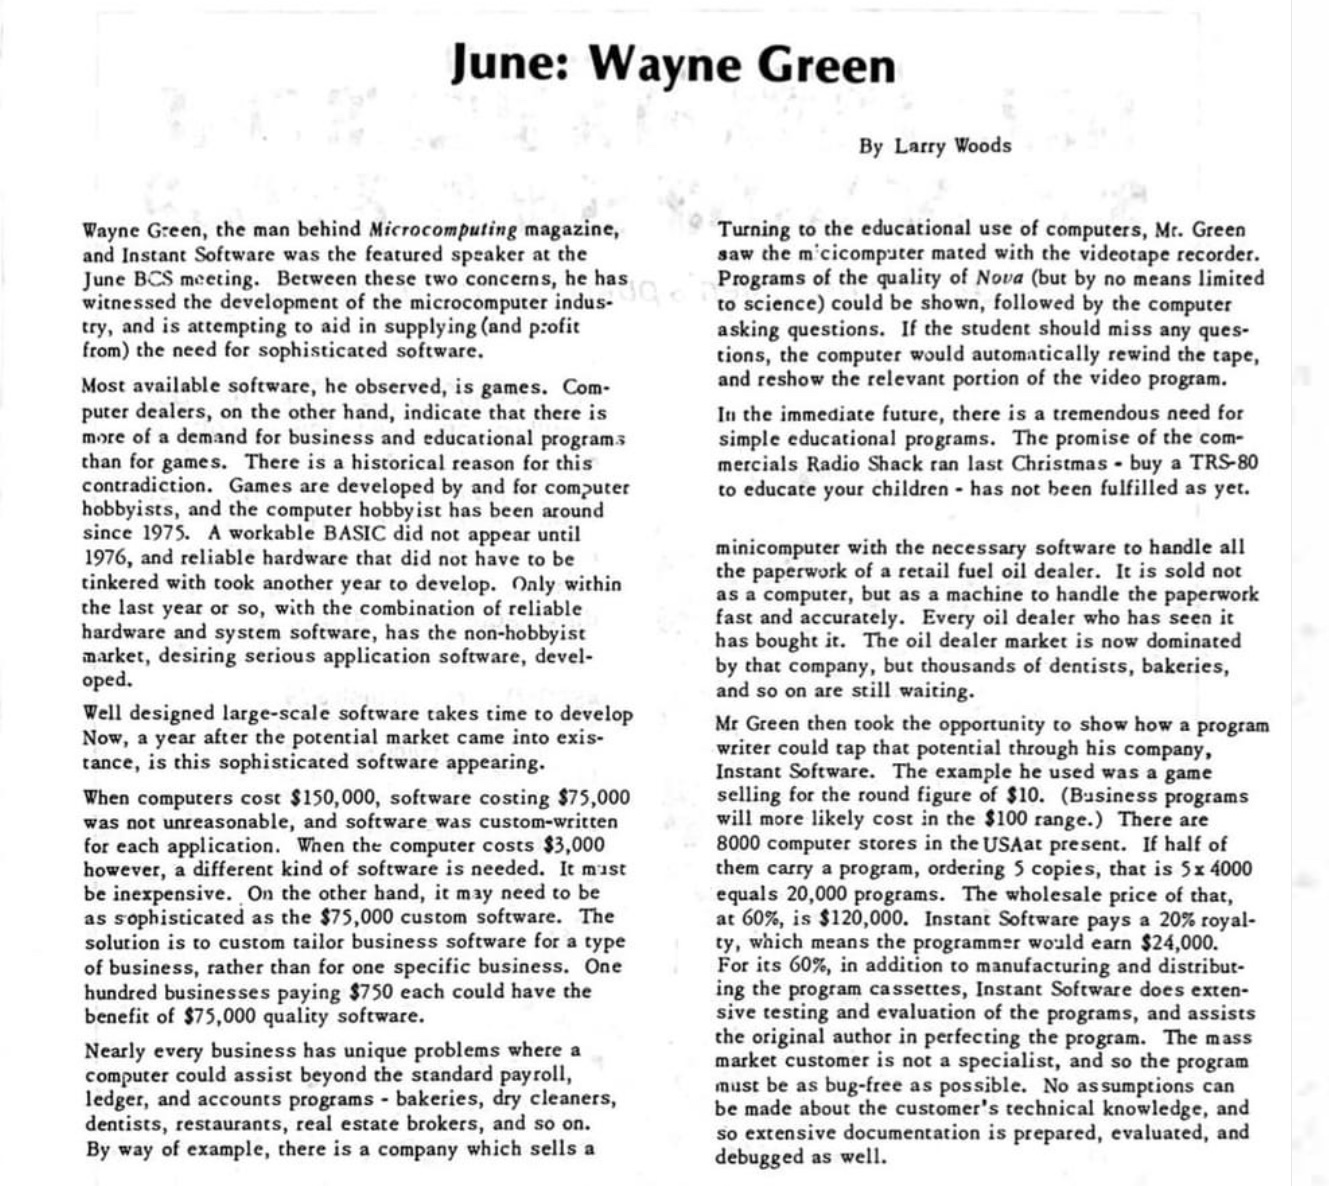 Boston Computer Society newsletter article on Wayne Green